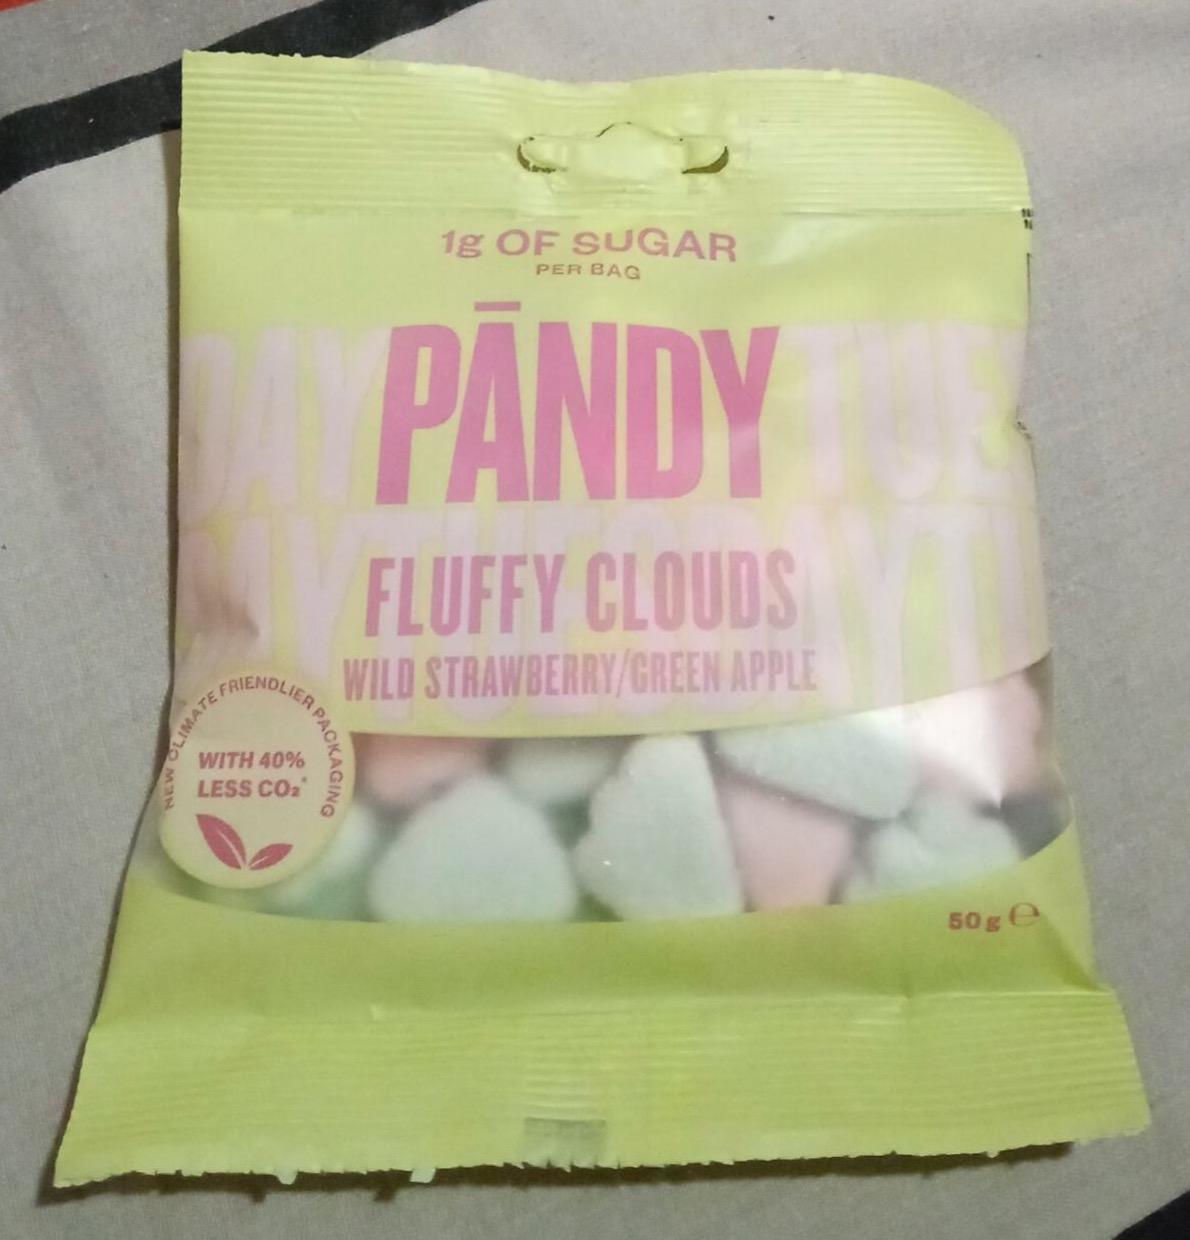 Képek - Pandy fluffy clouds cukormentes gumicukor eper zöldalma